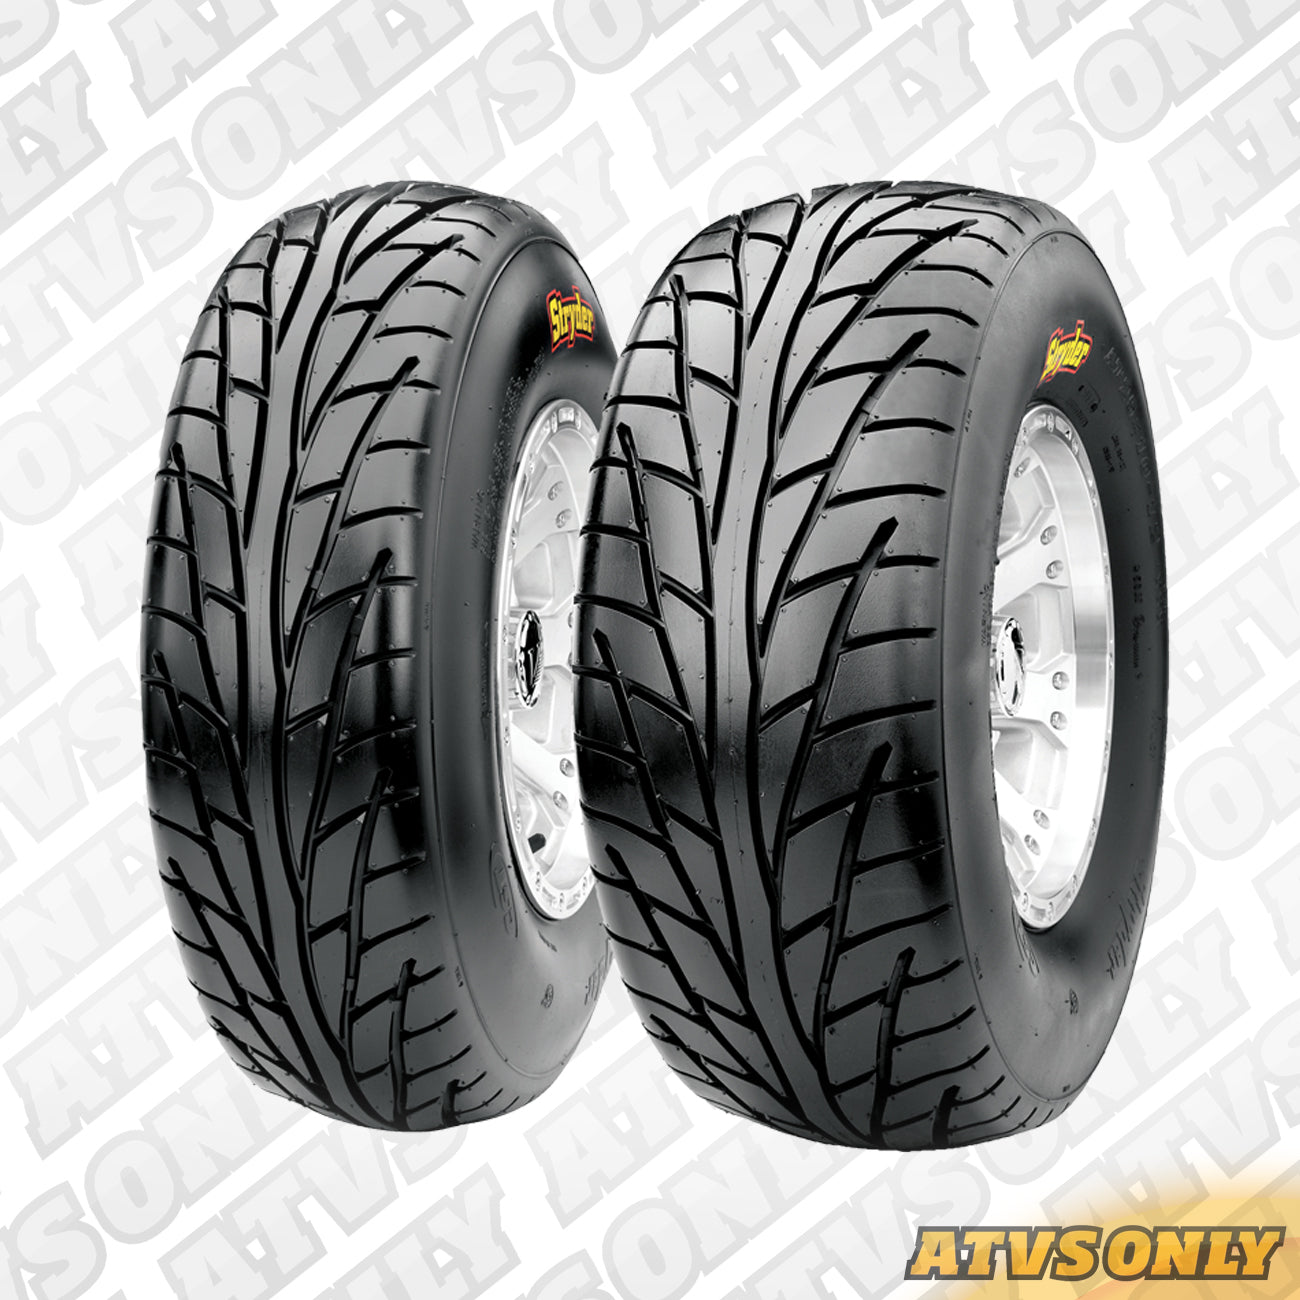 Tyres - CS-06 Stryder 14" Street/Road Tyre